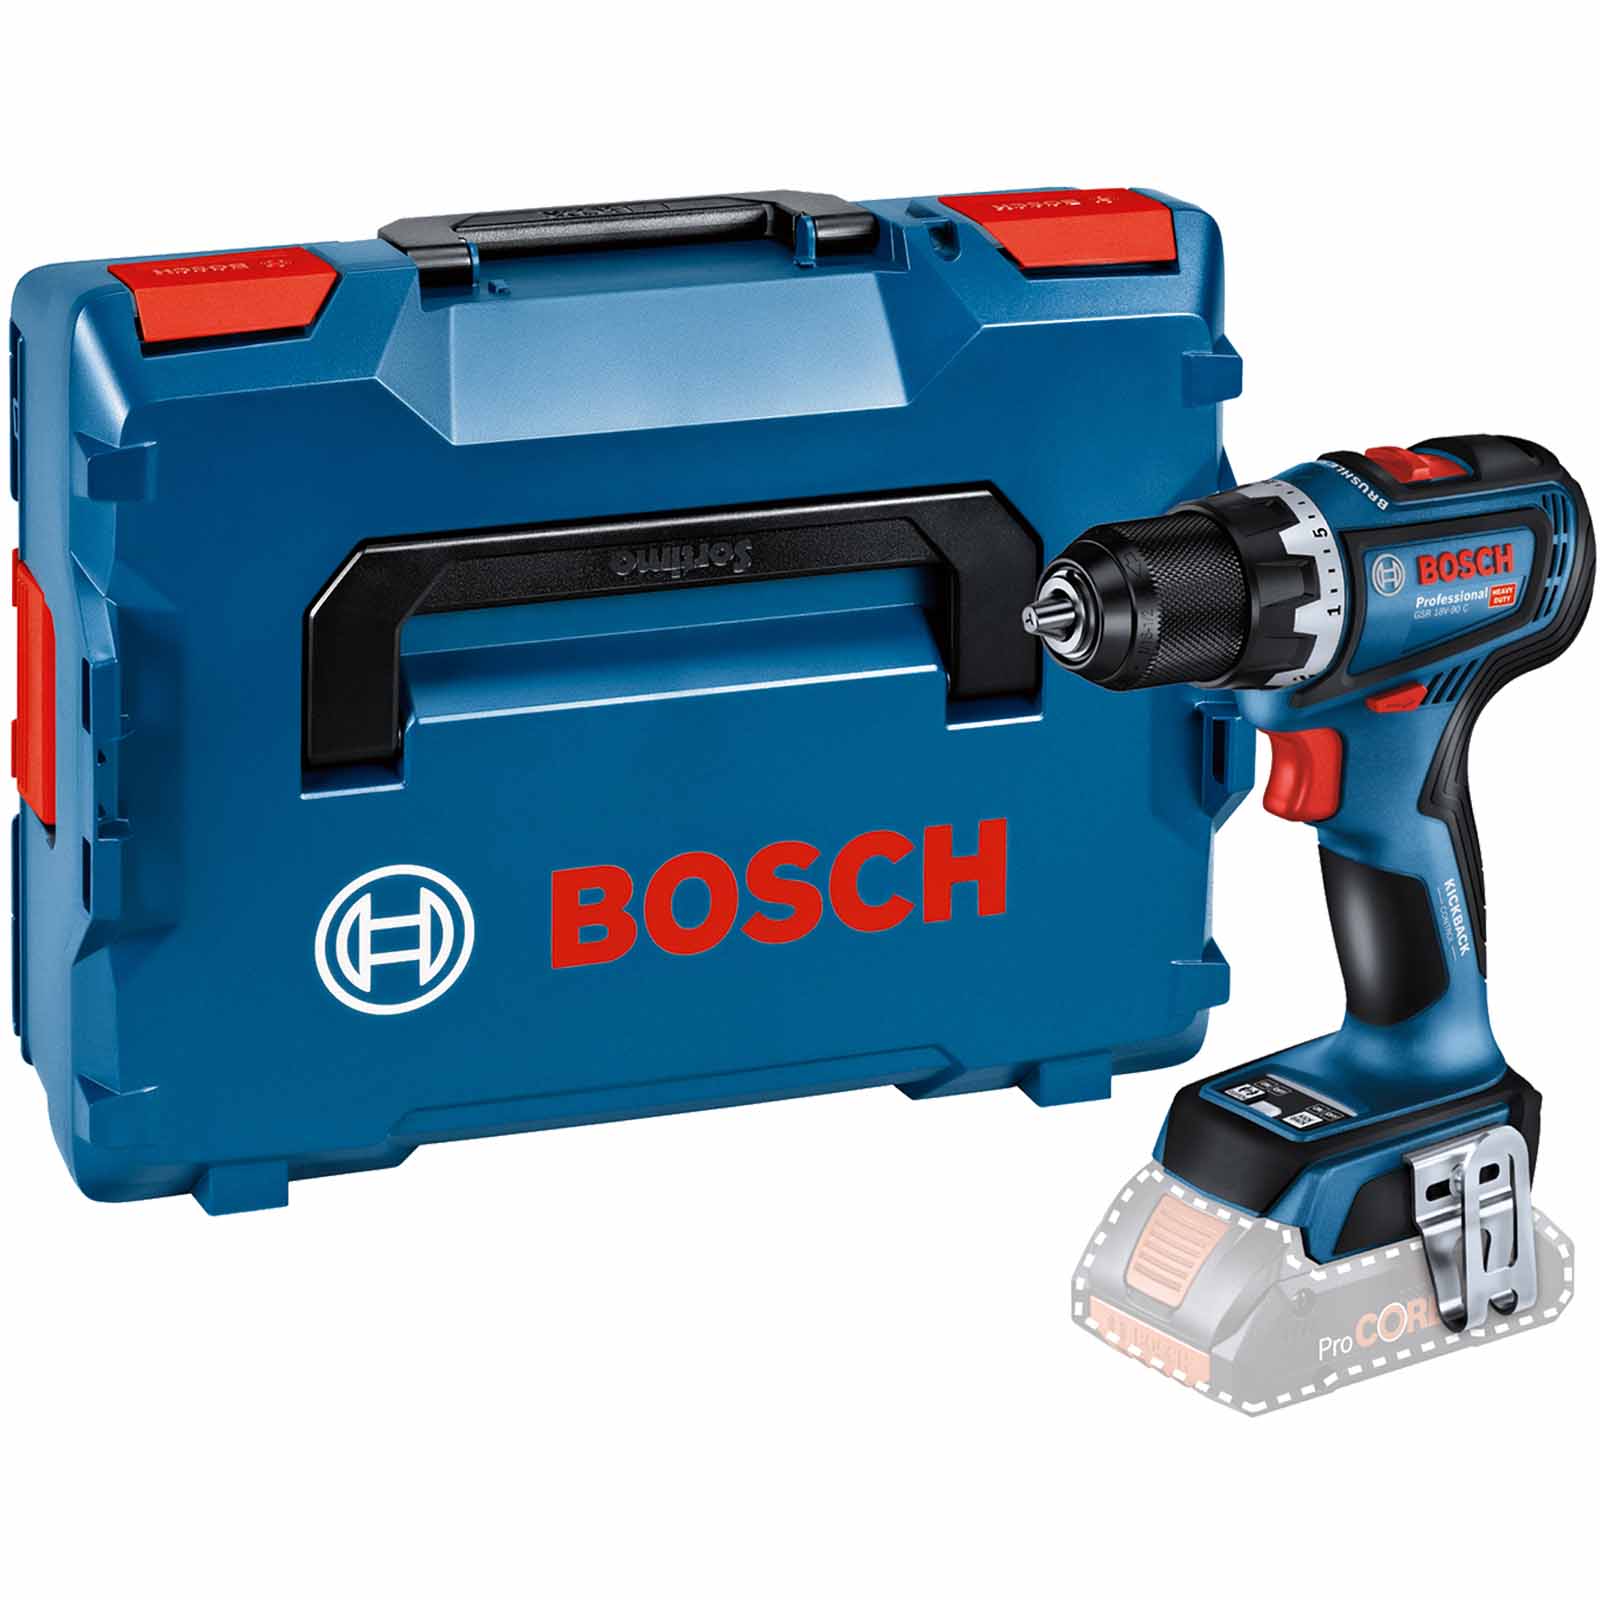 Bosch GSR 18V-90 C 18v Cordless Brushless Drill Driver No Batteries No Charger Case